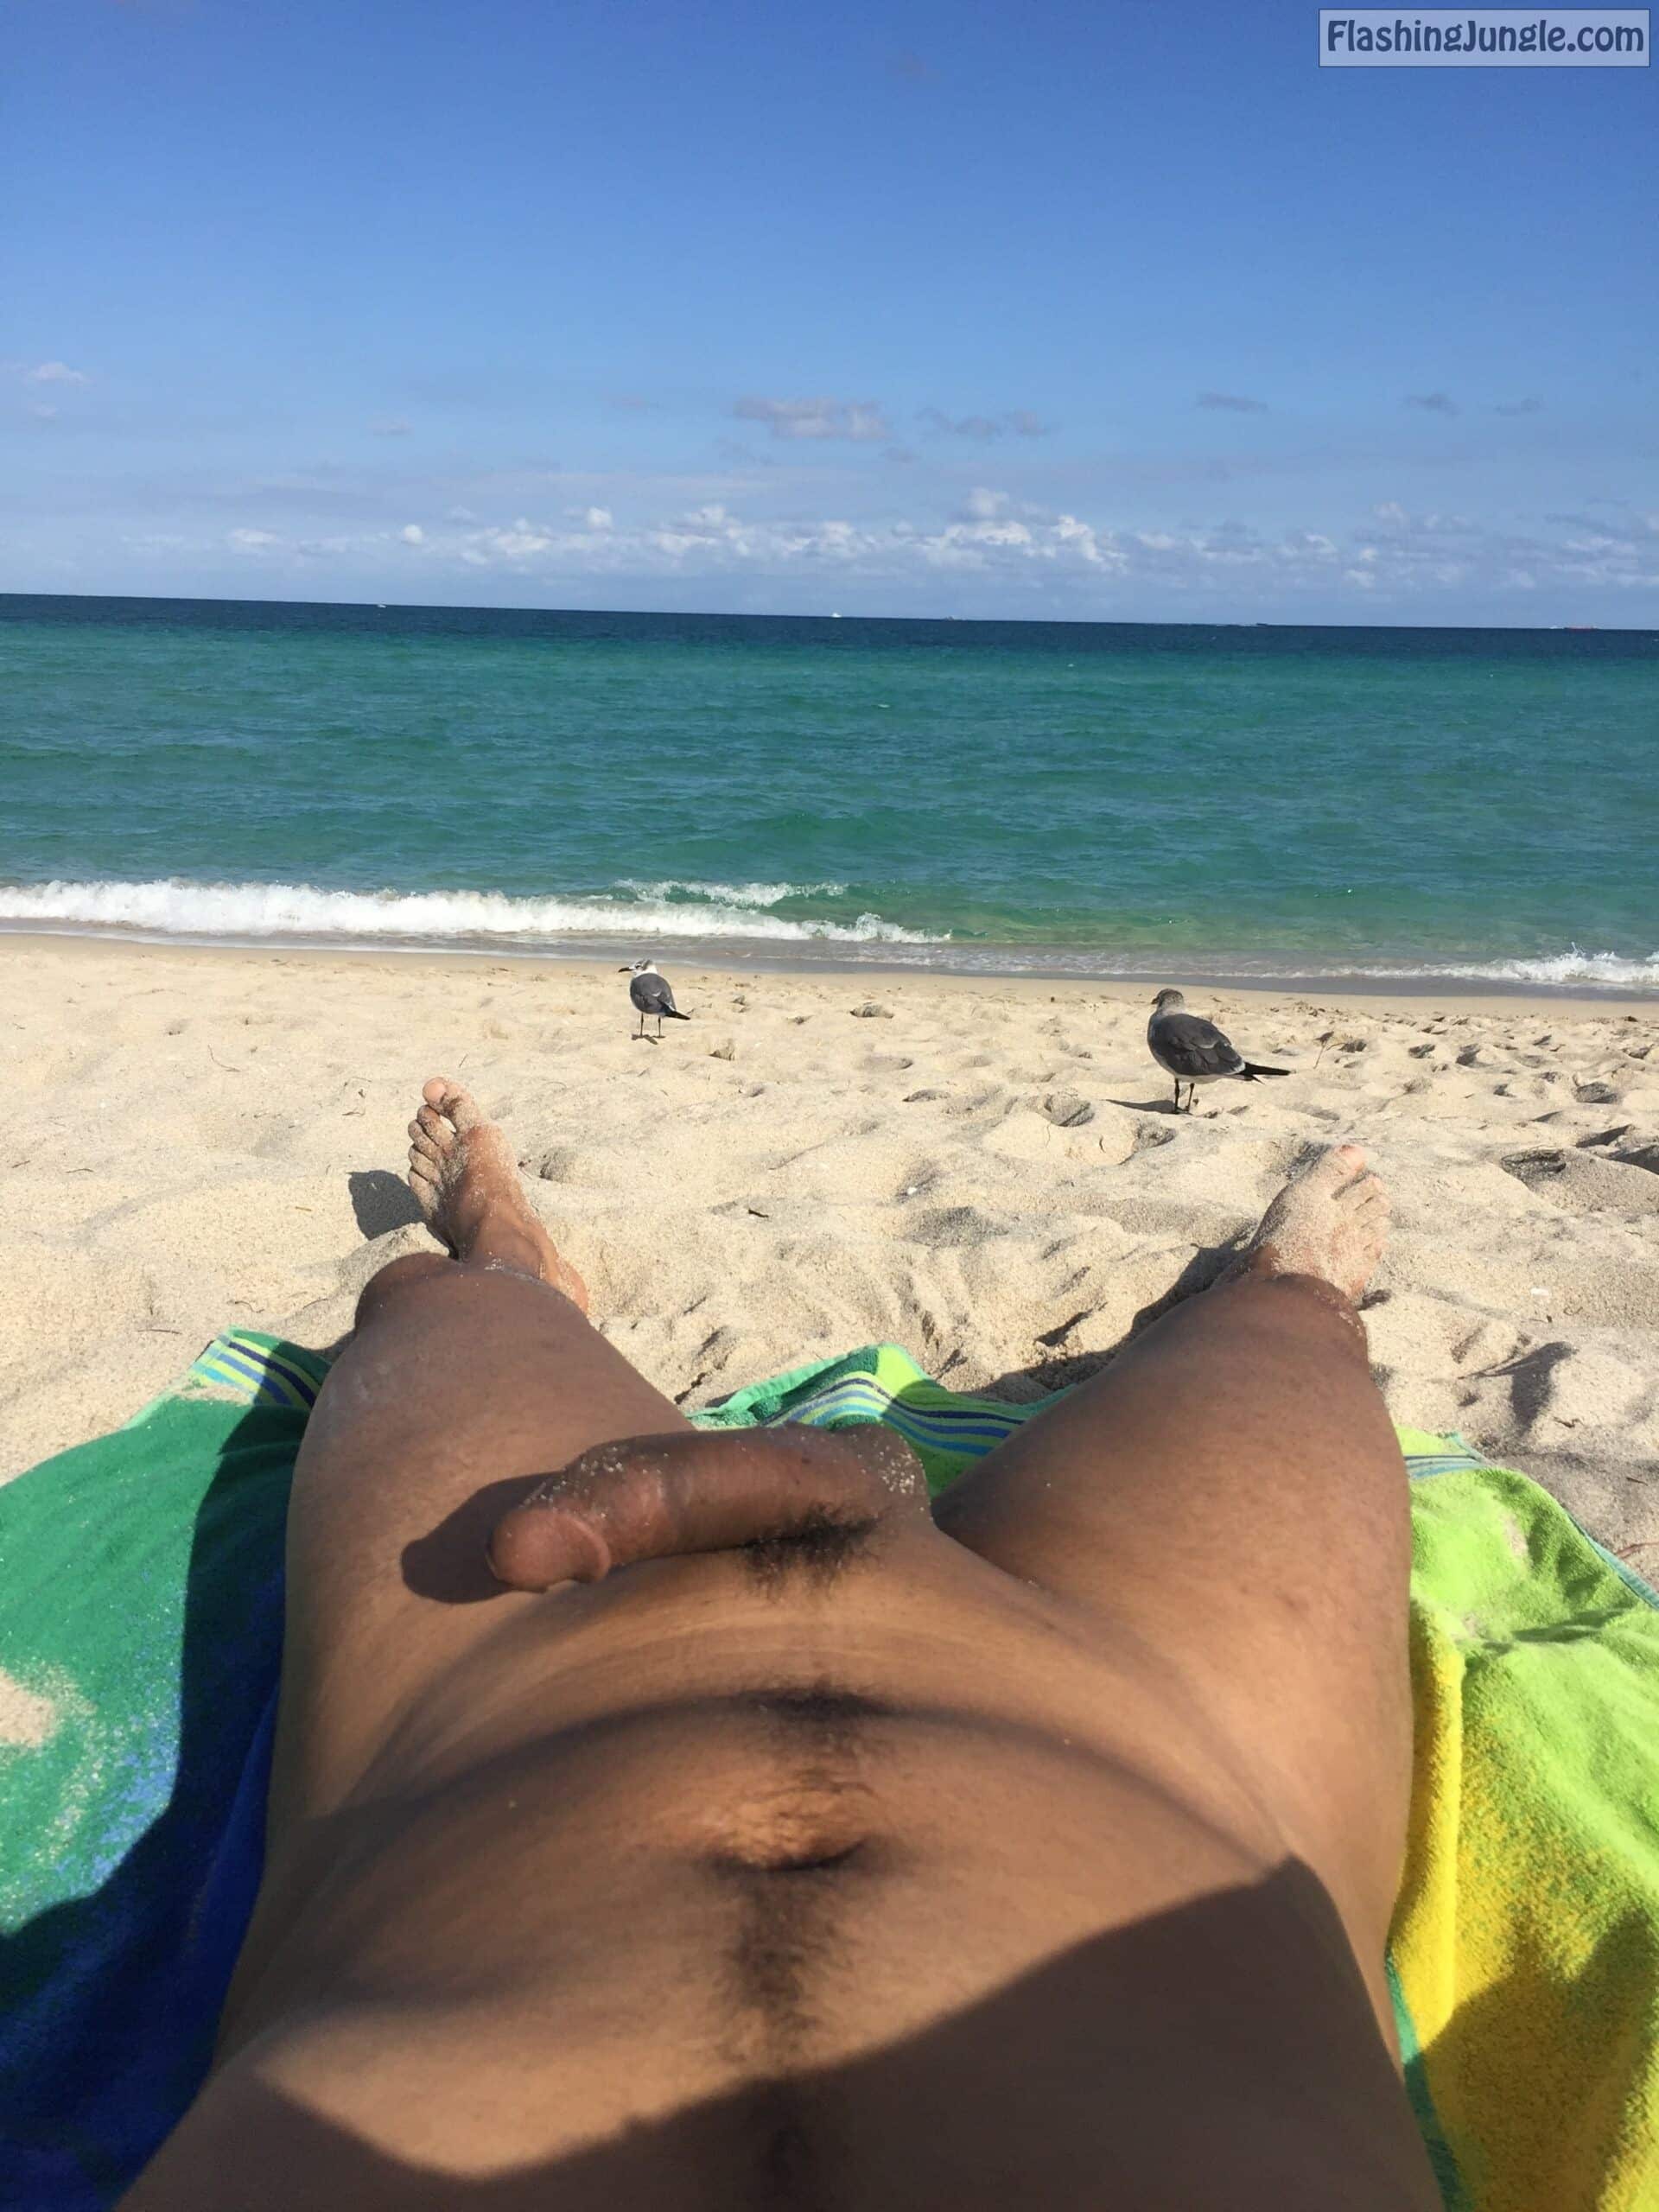 Miami Beach real nudity public nudity dick flash